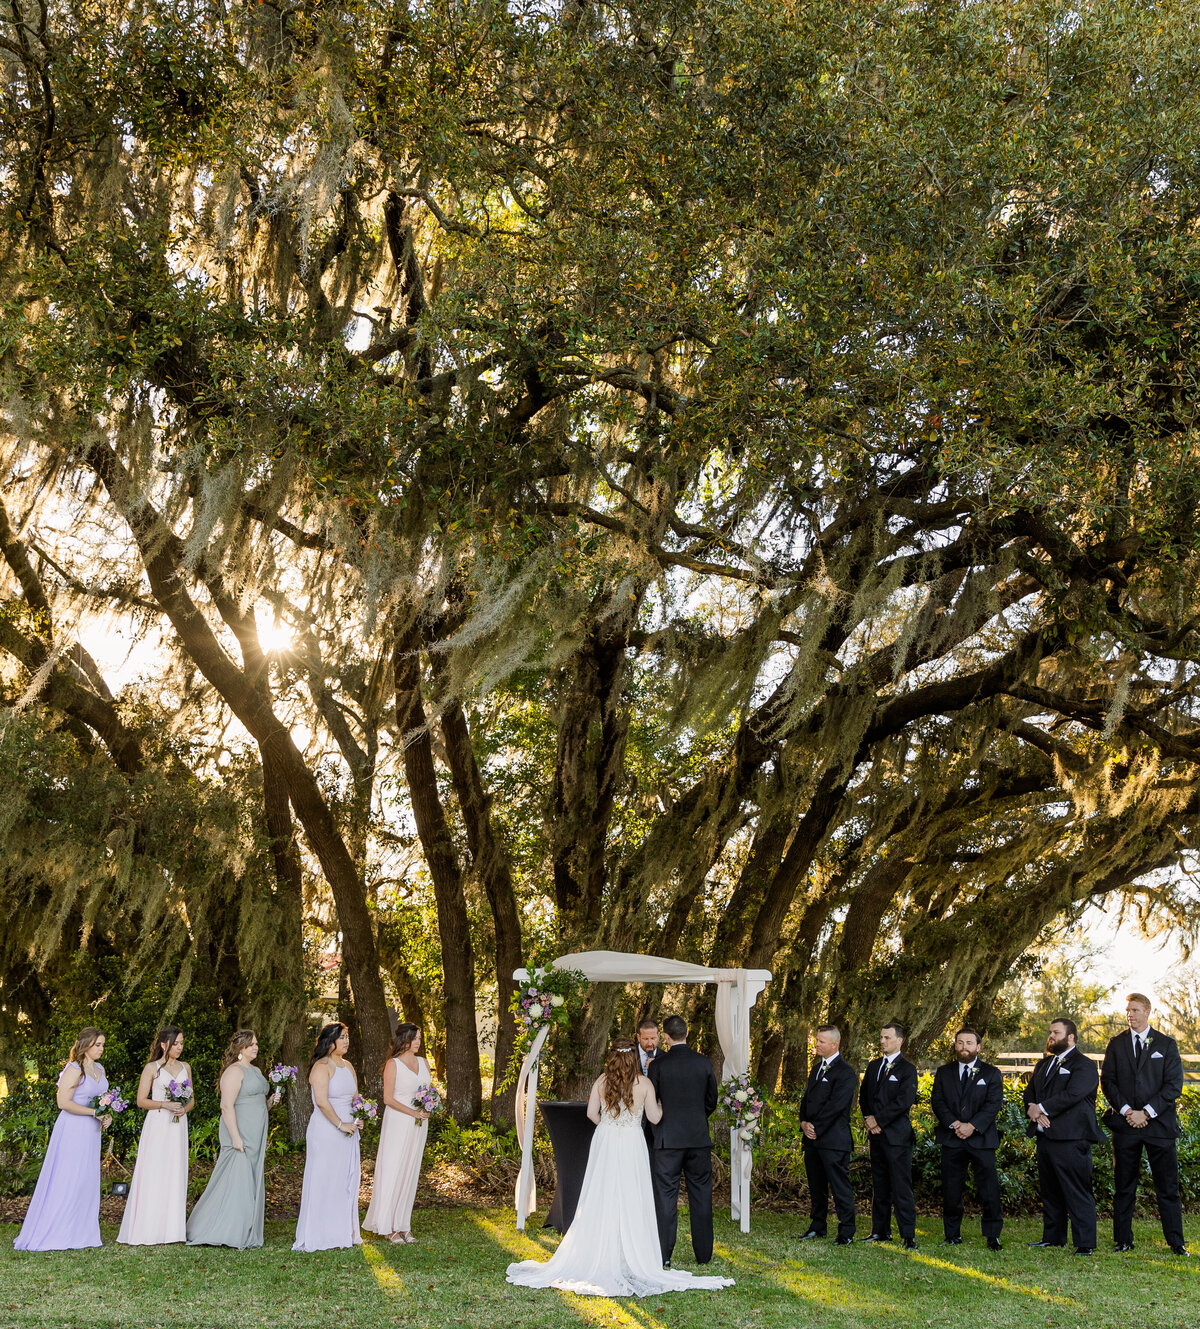 Bride and Groom at ceremony at wedding  Orlando Florida captured by Orlando  Wedding Photographer Blak Marie Photography